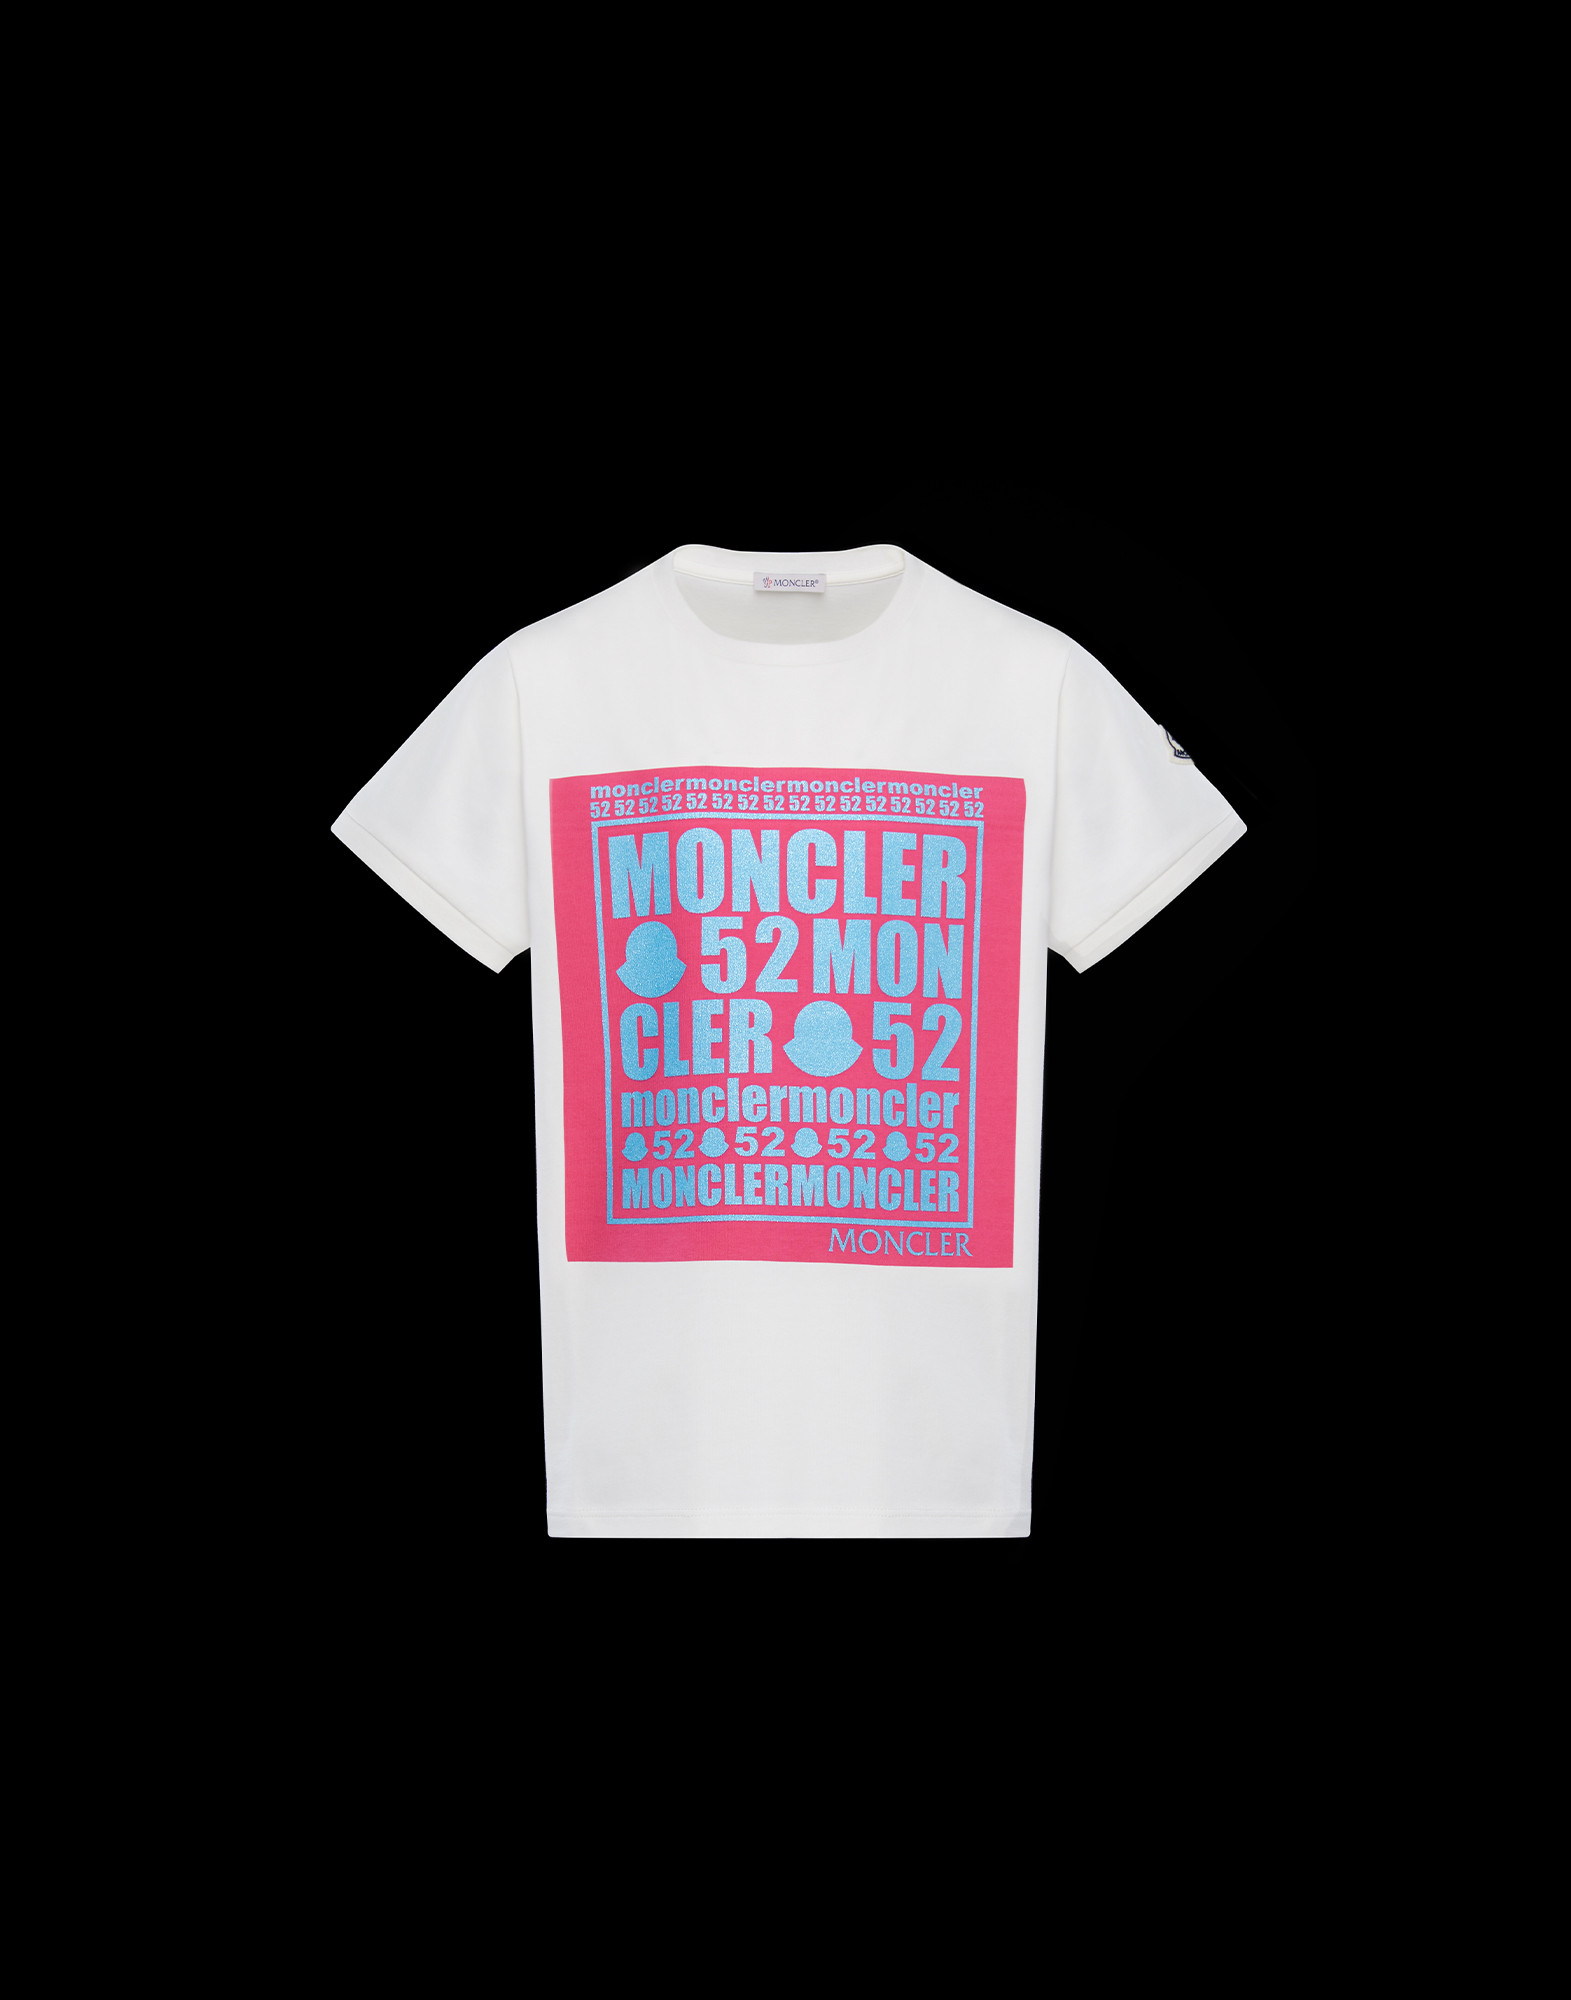 Moncler T-SHIRT for Woman, T-shirts 